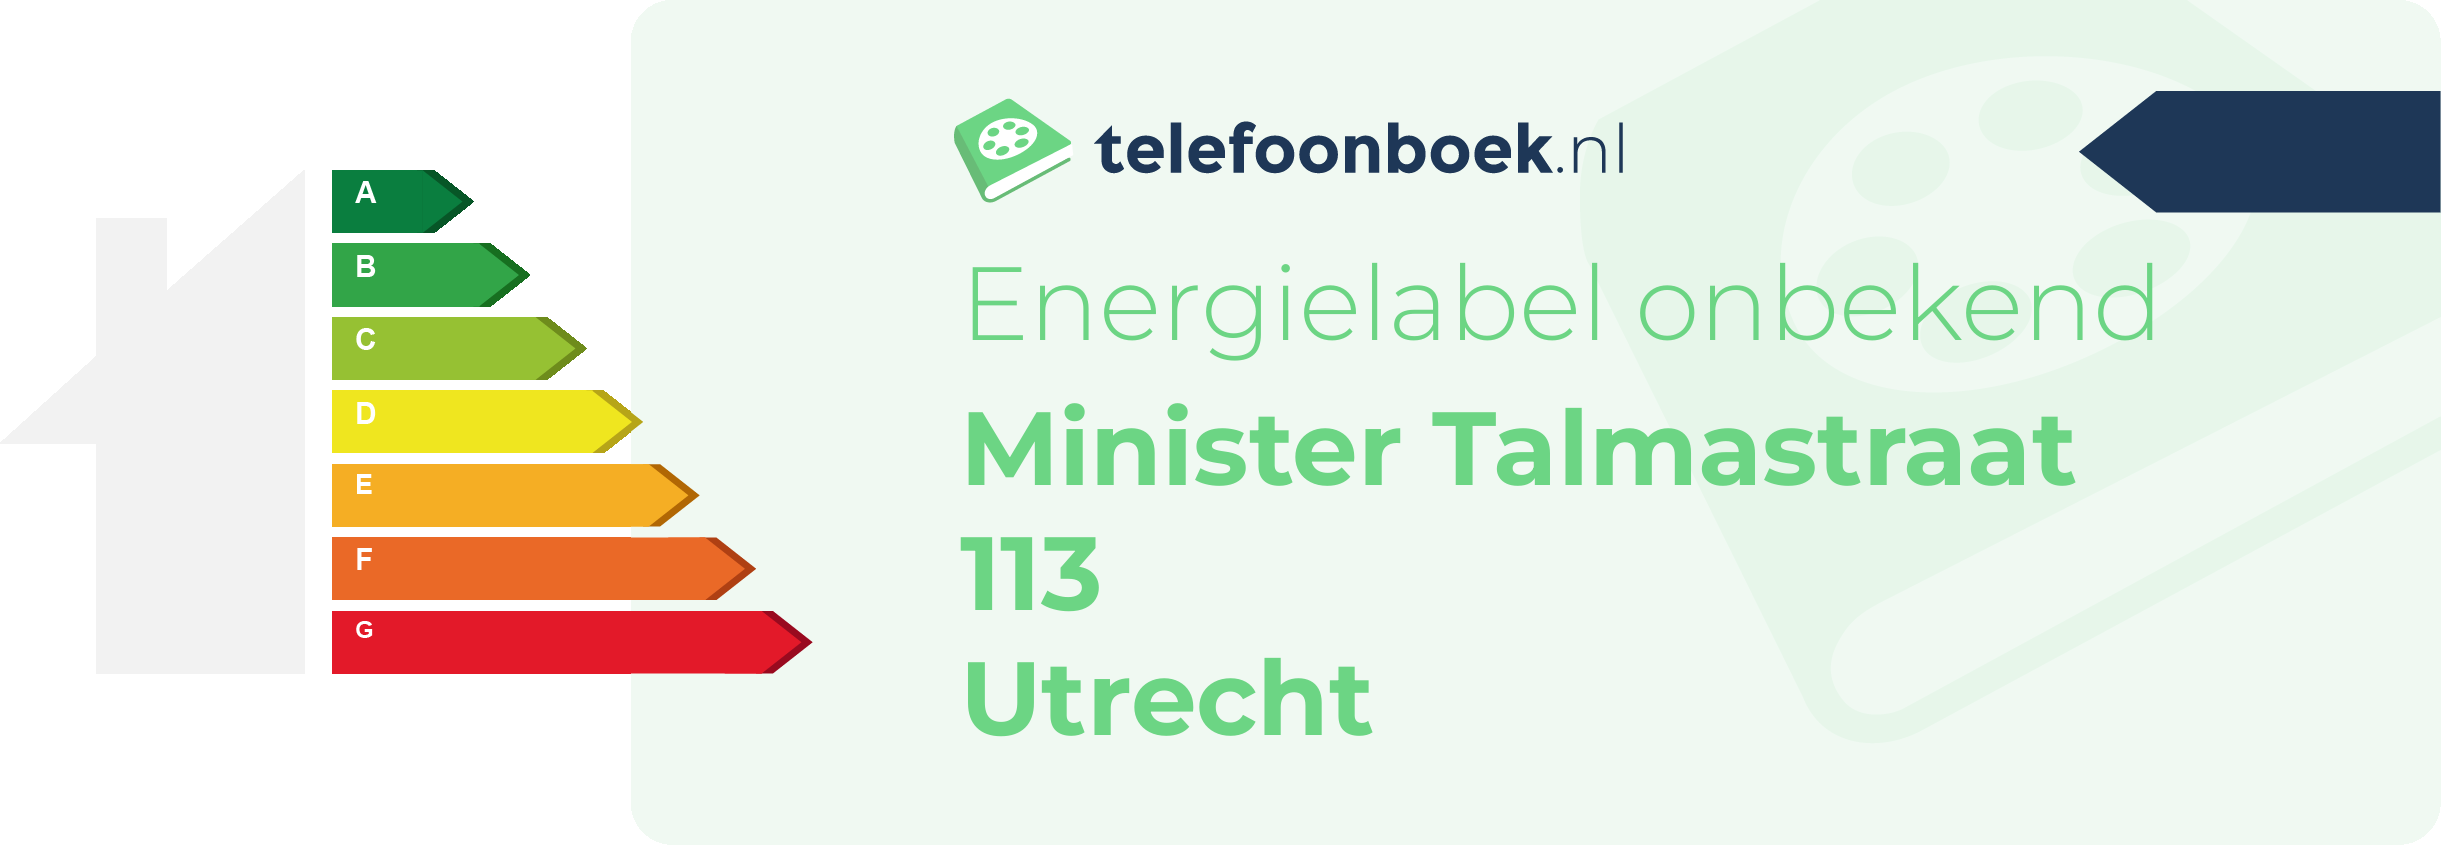 Energielabel Minister Talmastraat 113 Utrecht